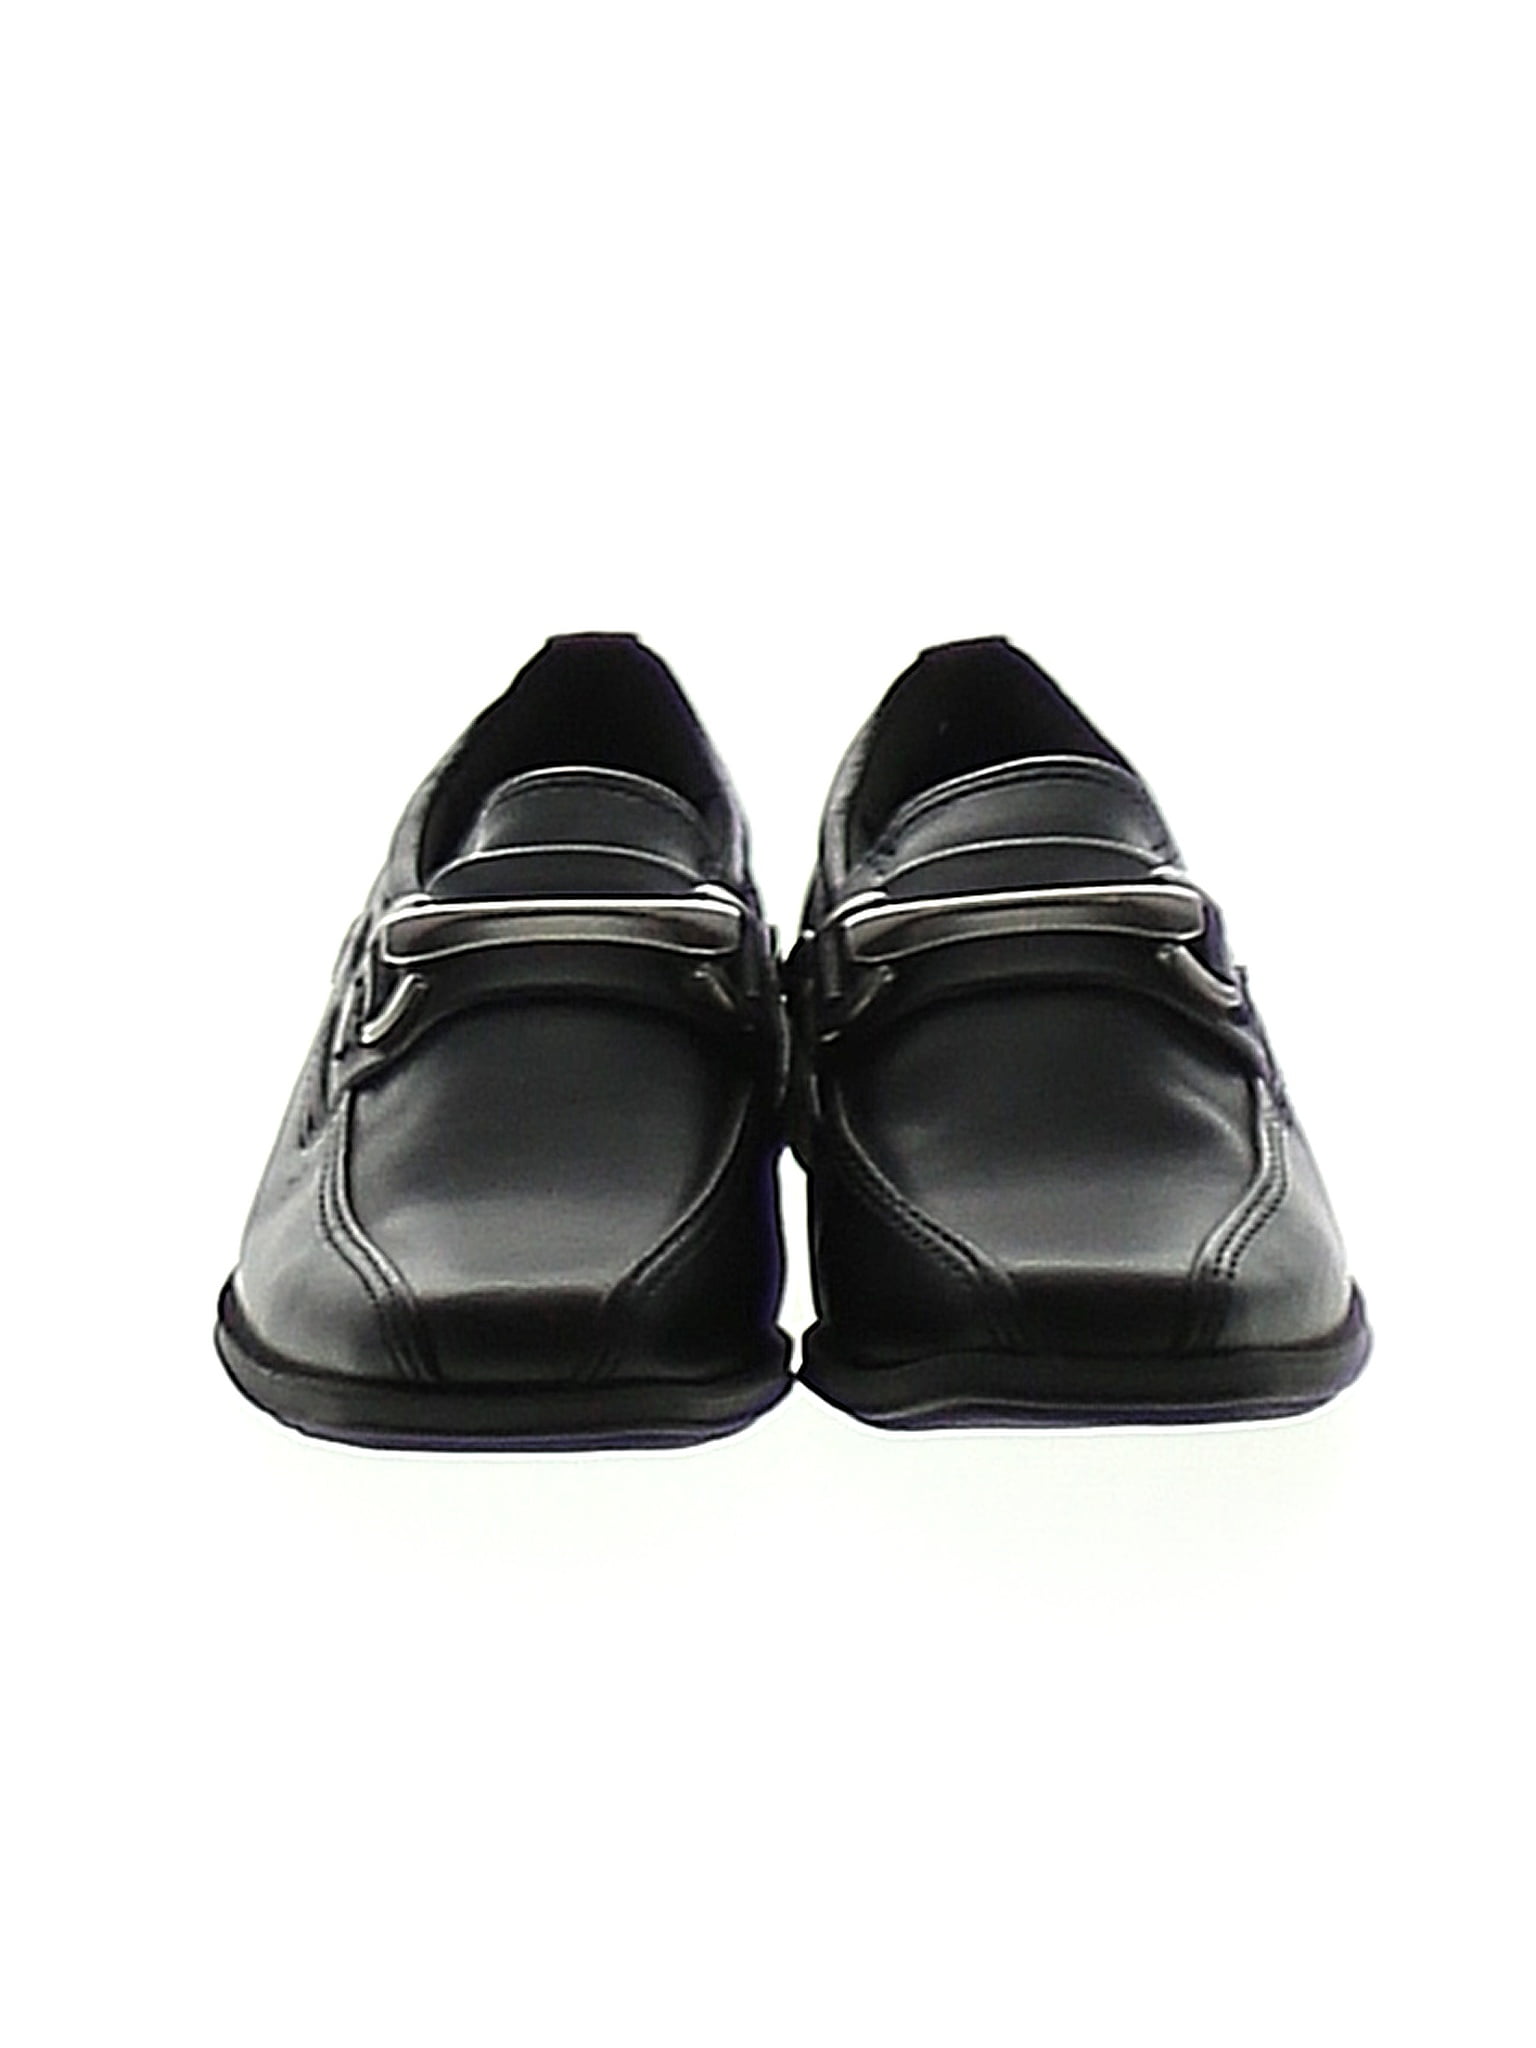 SmartFit Boys Shoes, size 1 1/2 white